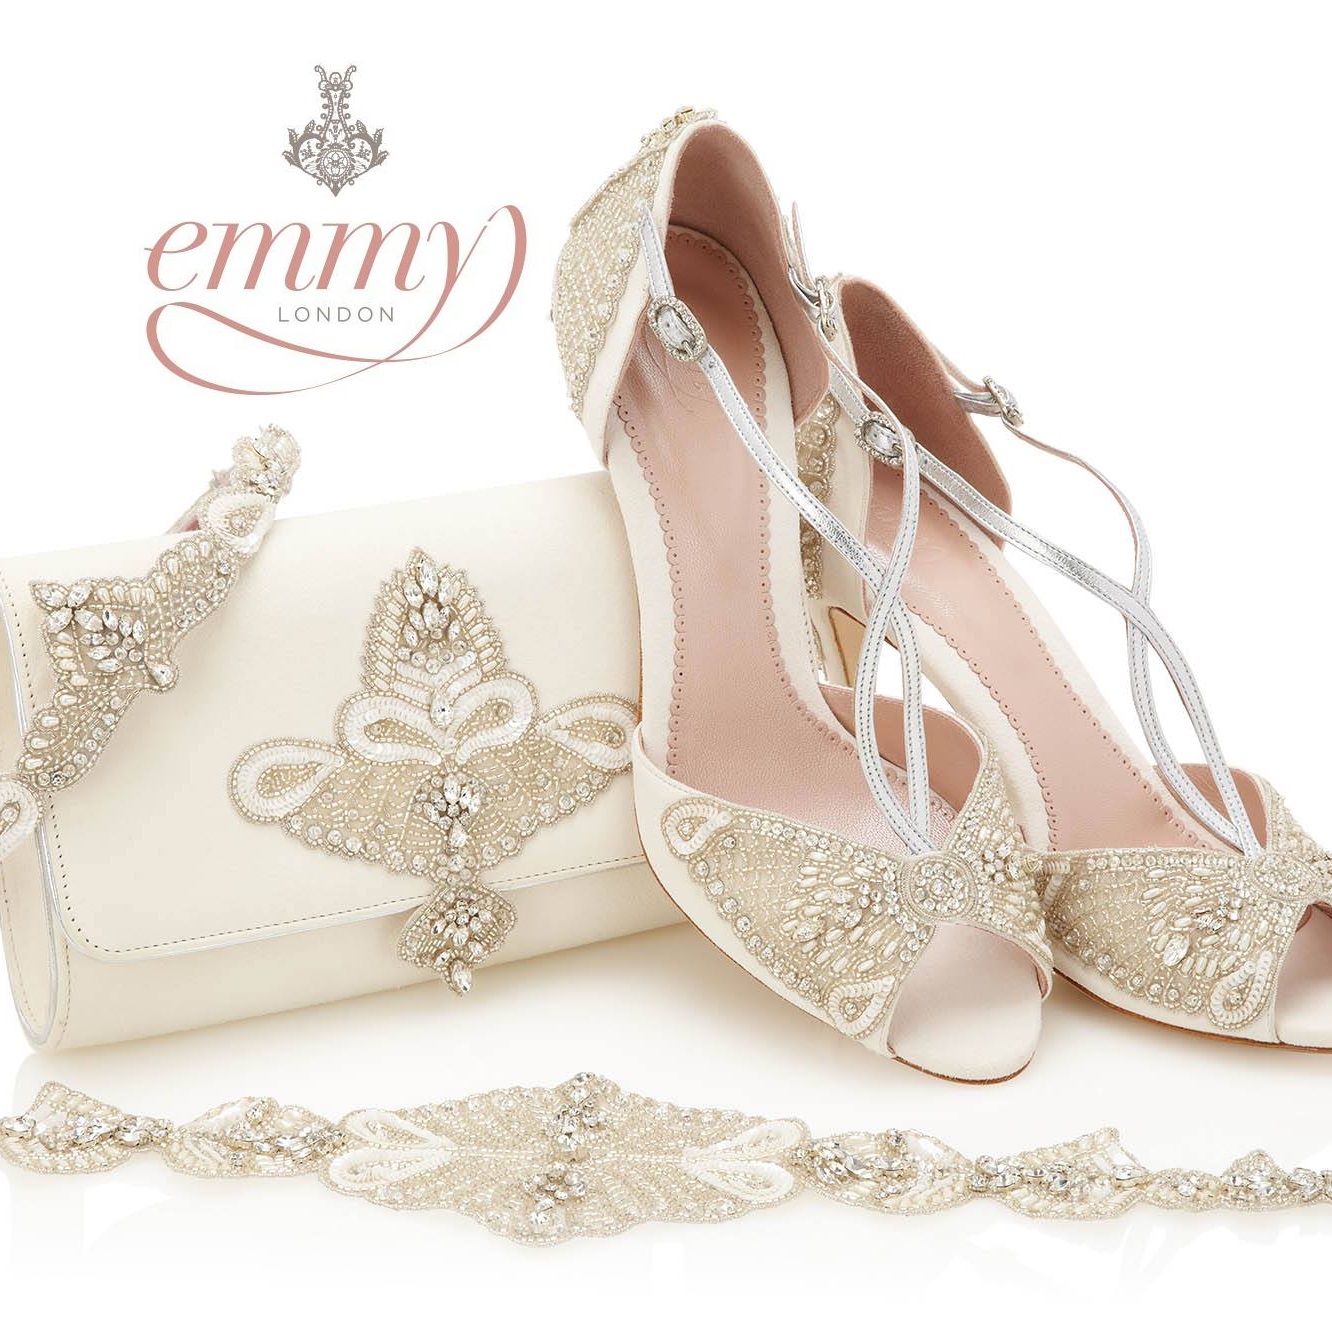 emmy london wedding shoes